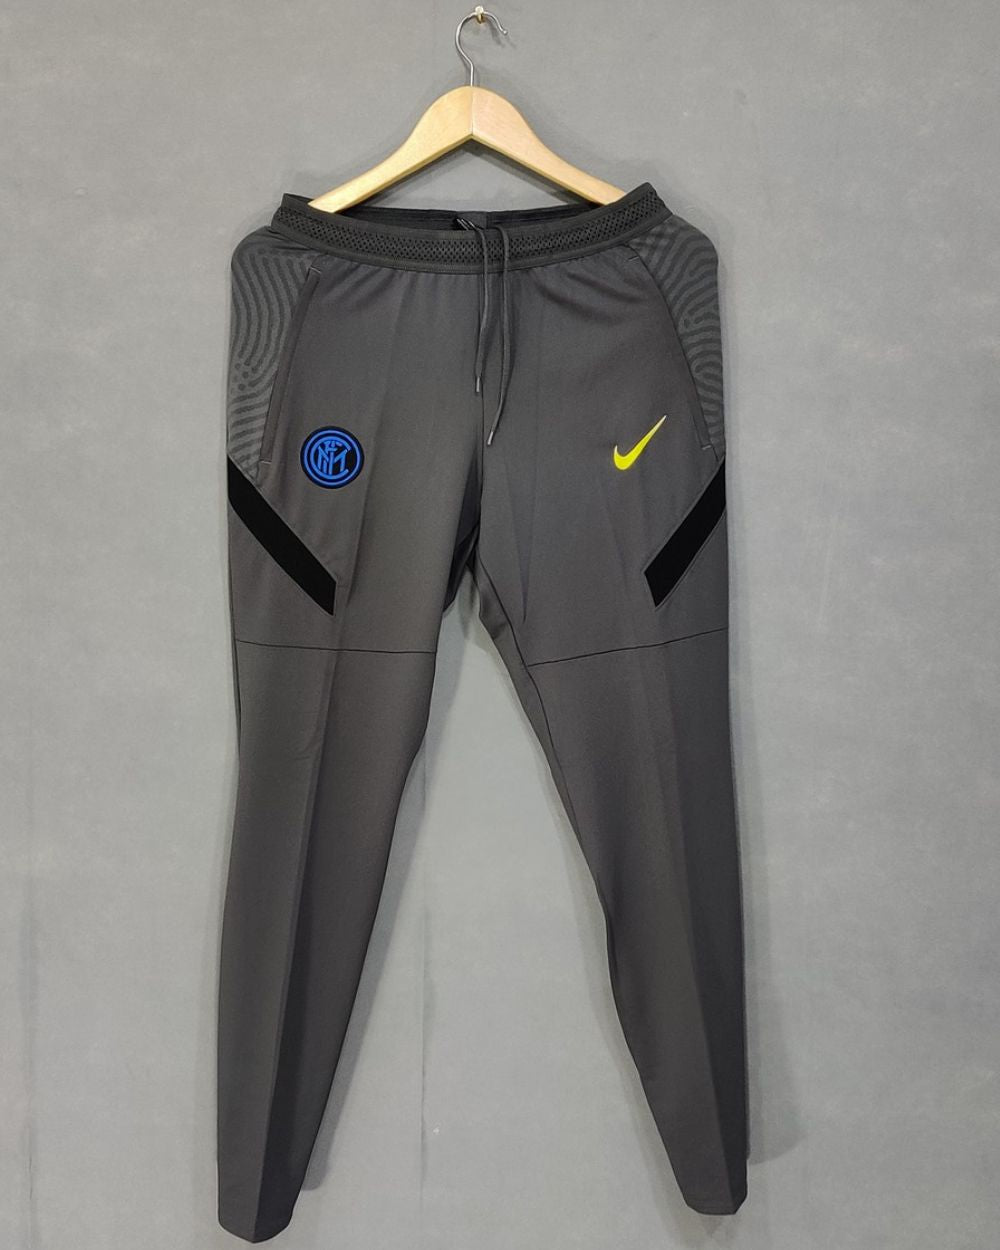 Nike Dri-Fit Branded Original Sports Trouser For Men